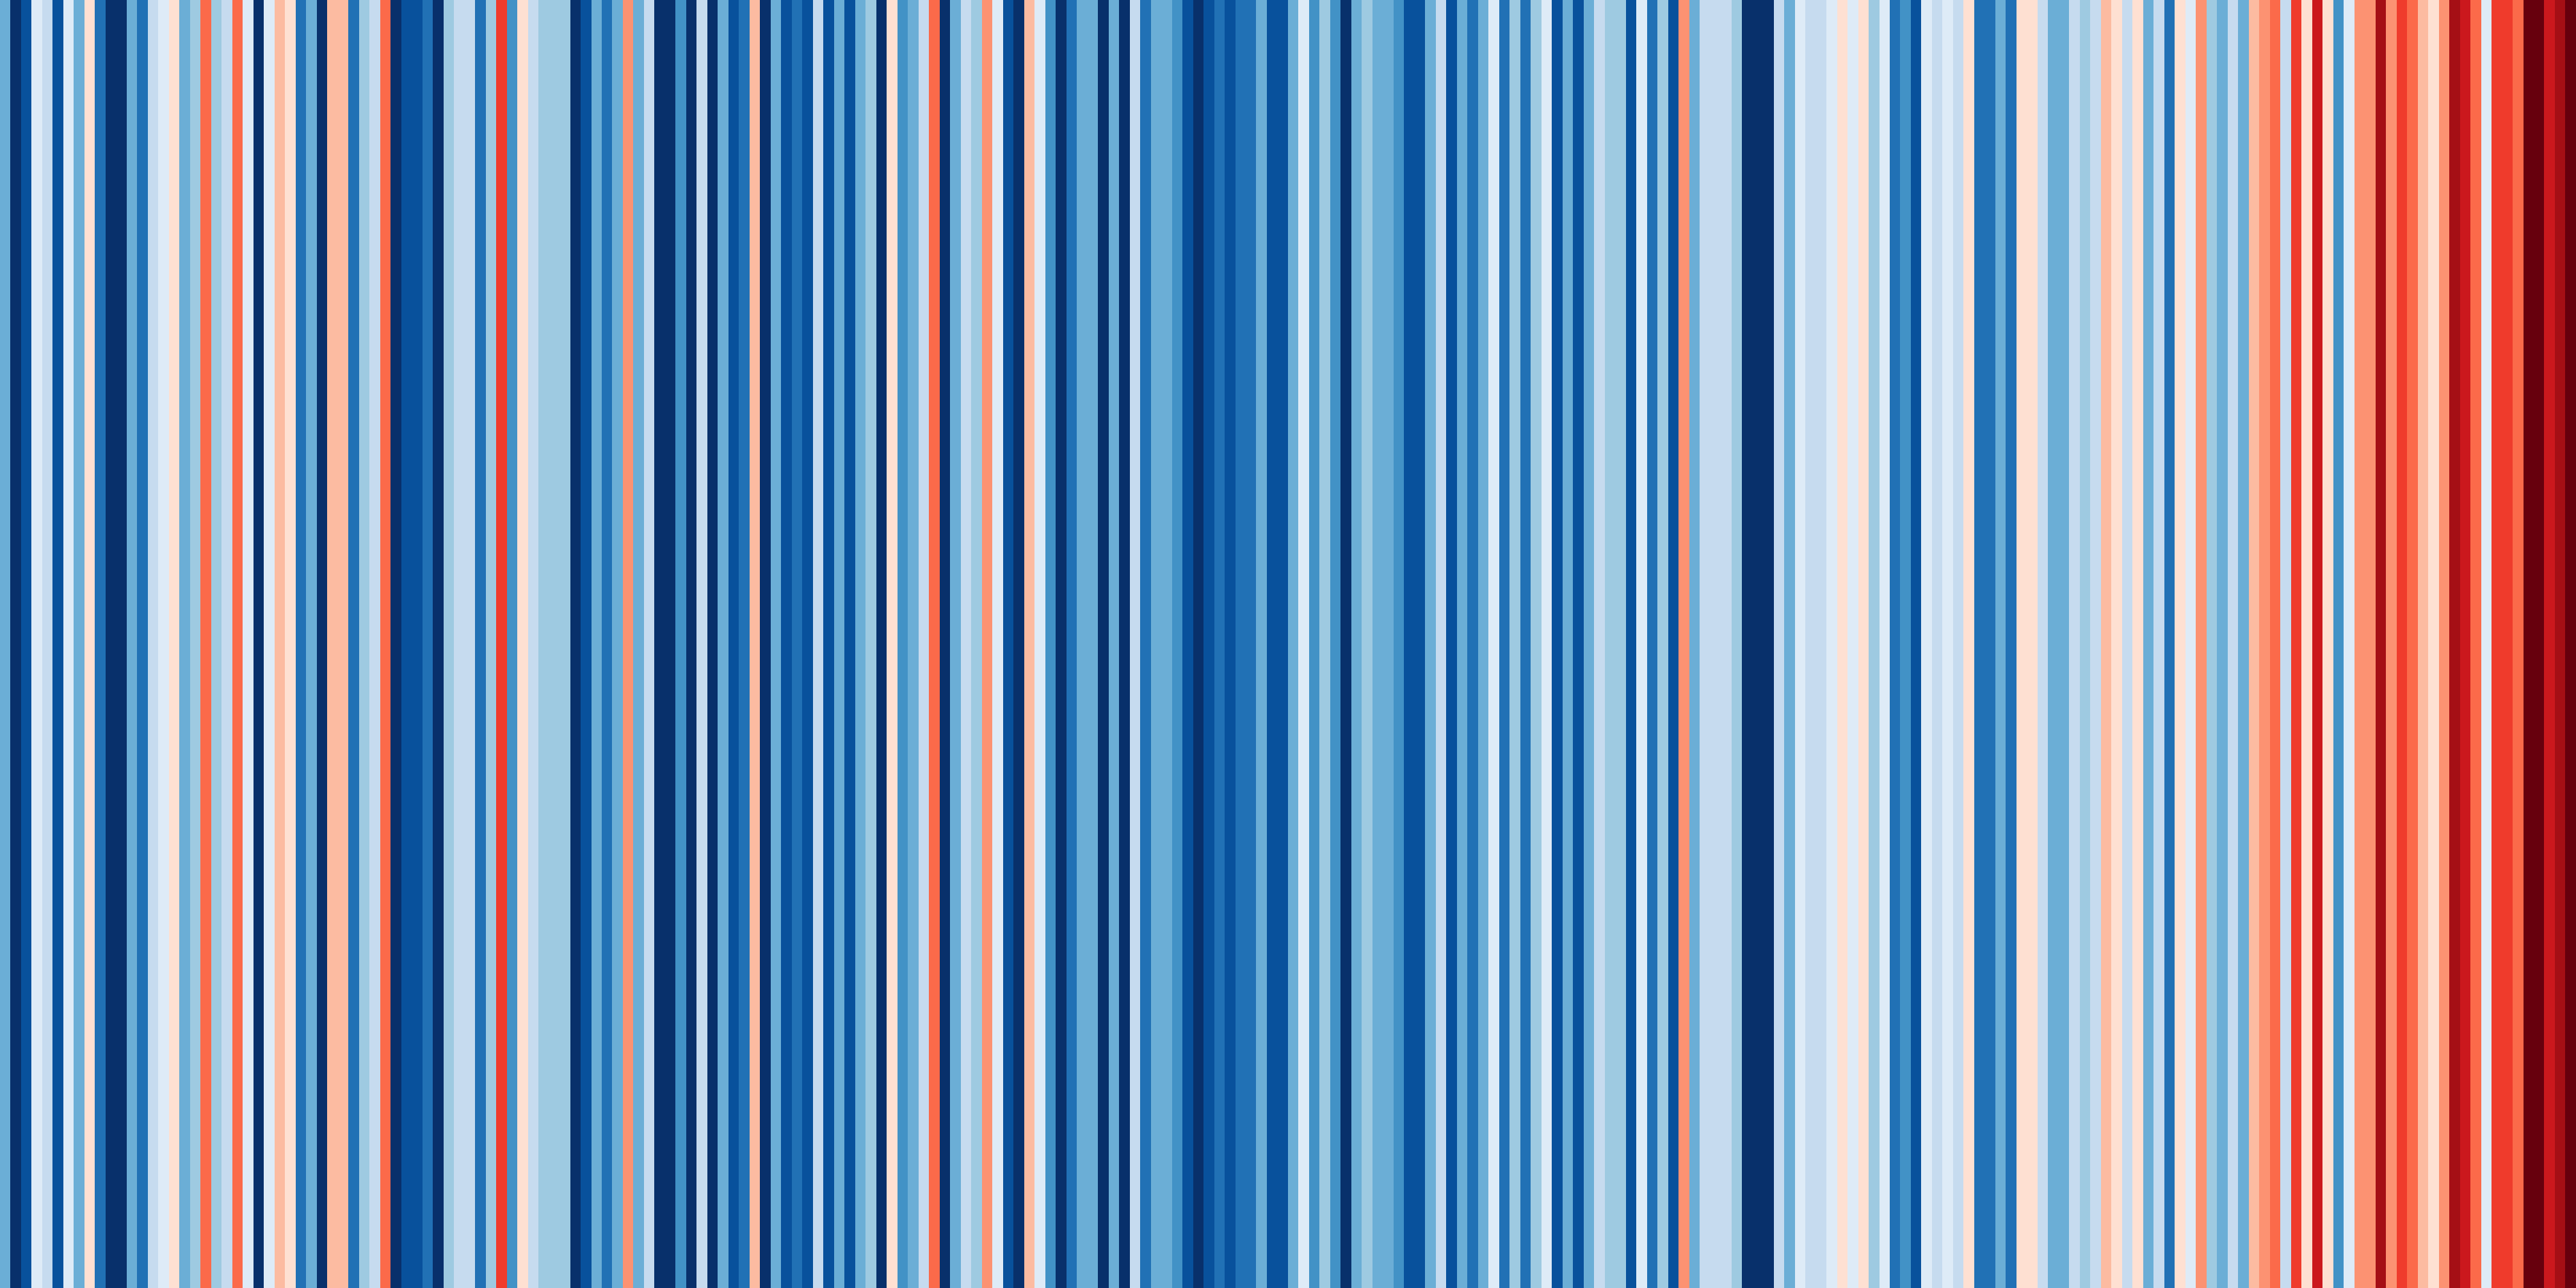 Warming Stripes for Vienna, Europe, Austria